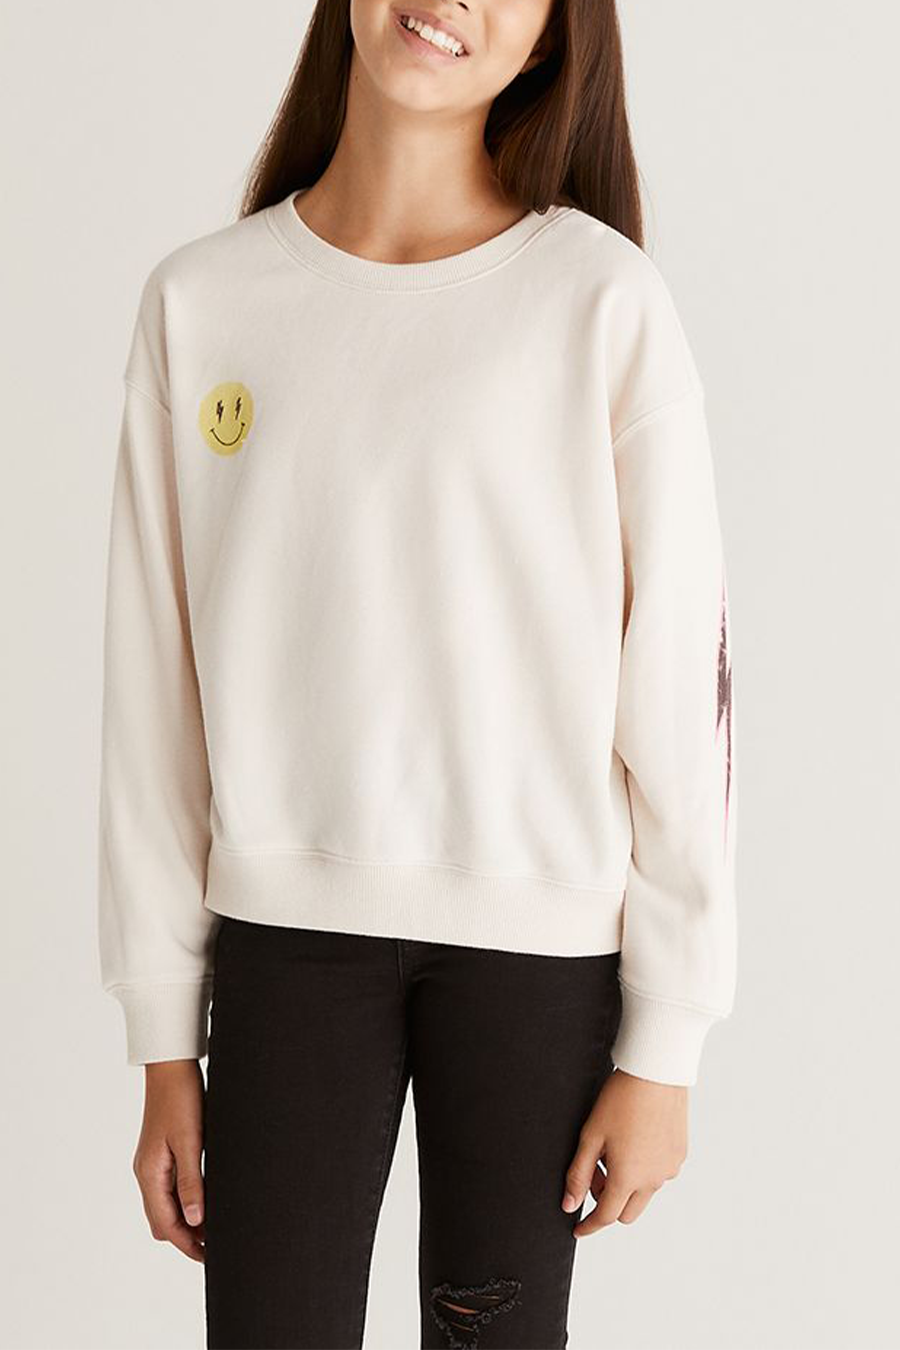 Girls Noa Graphic Sweatshirt | Sandstone - Main Image Number 1 of 2